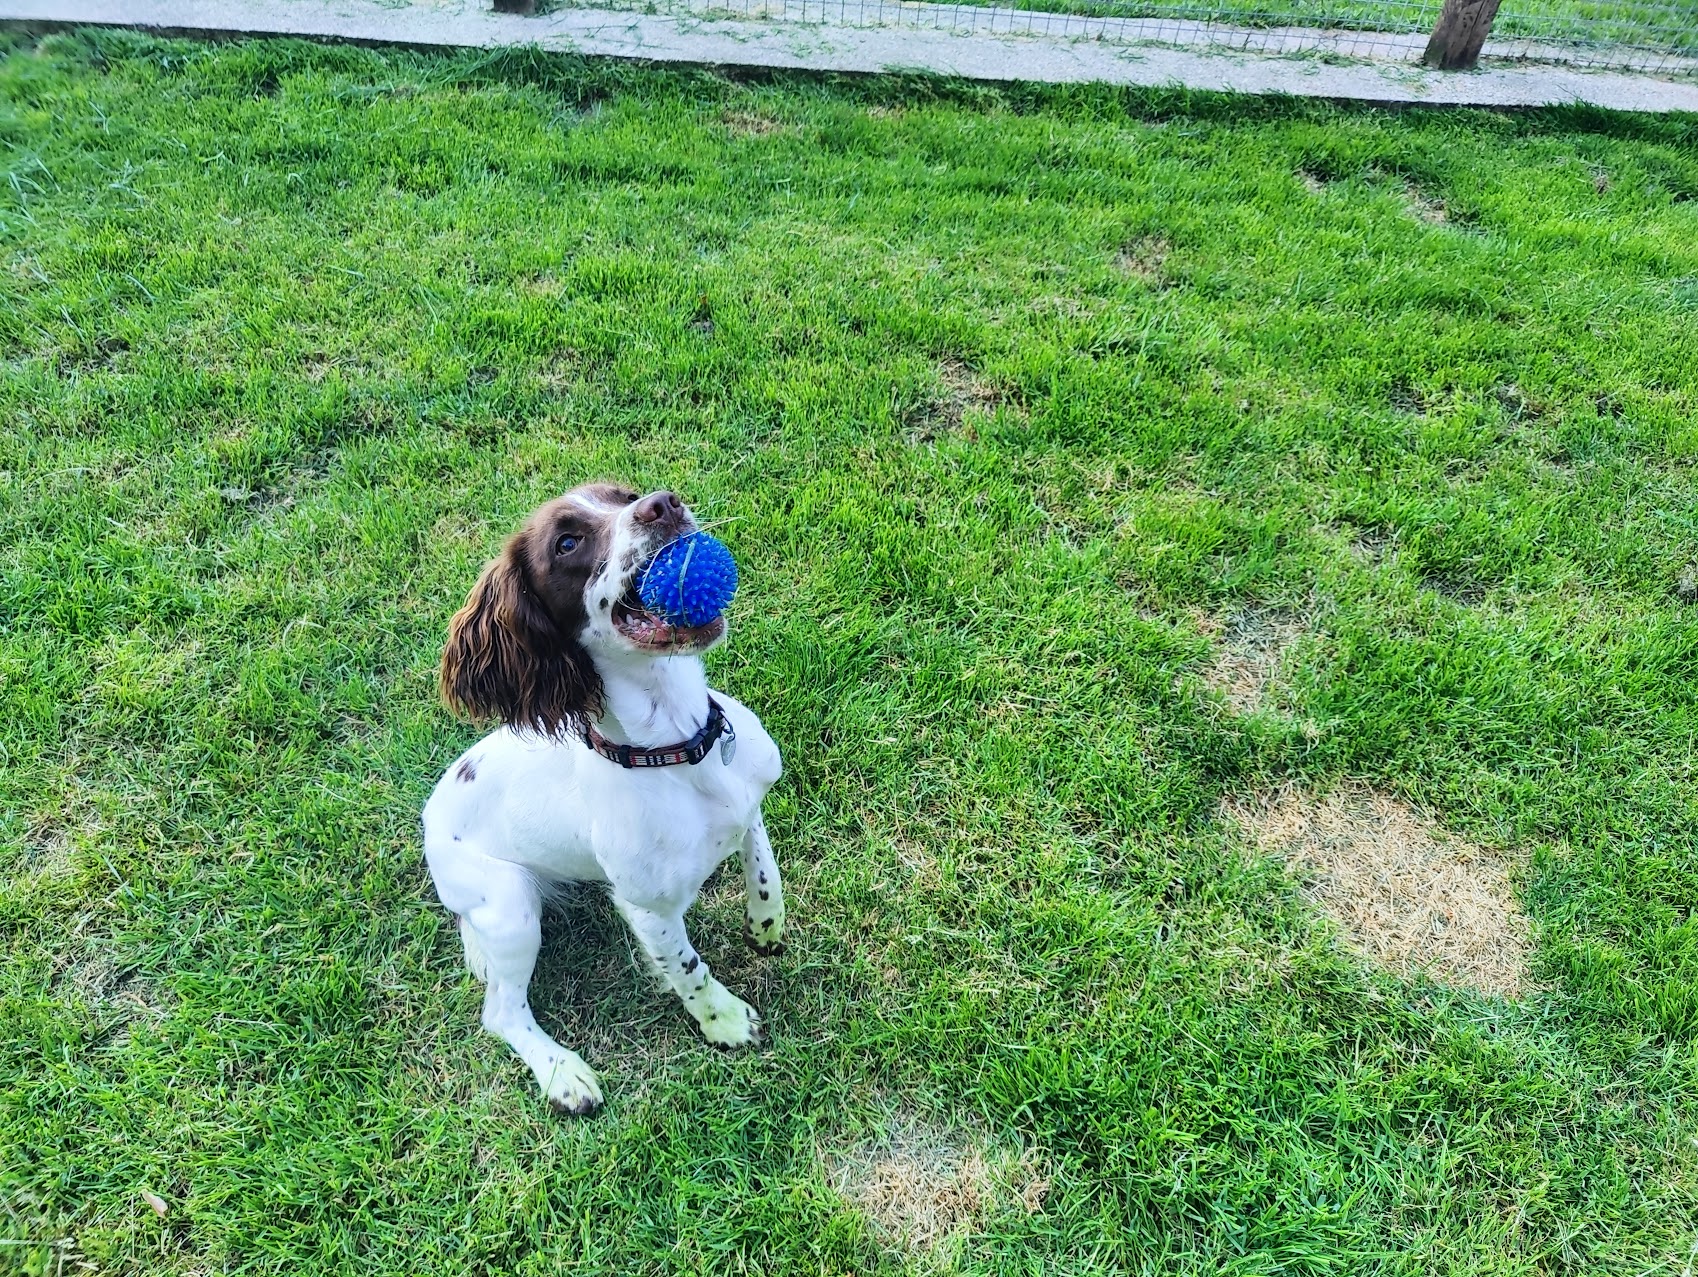 Spaniel dog with a ball